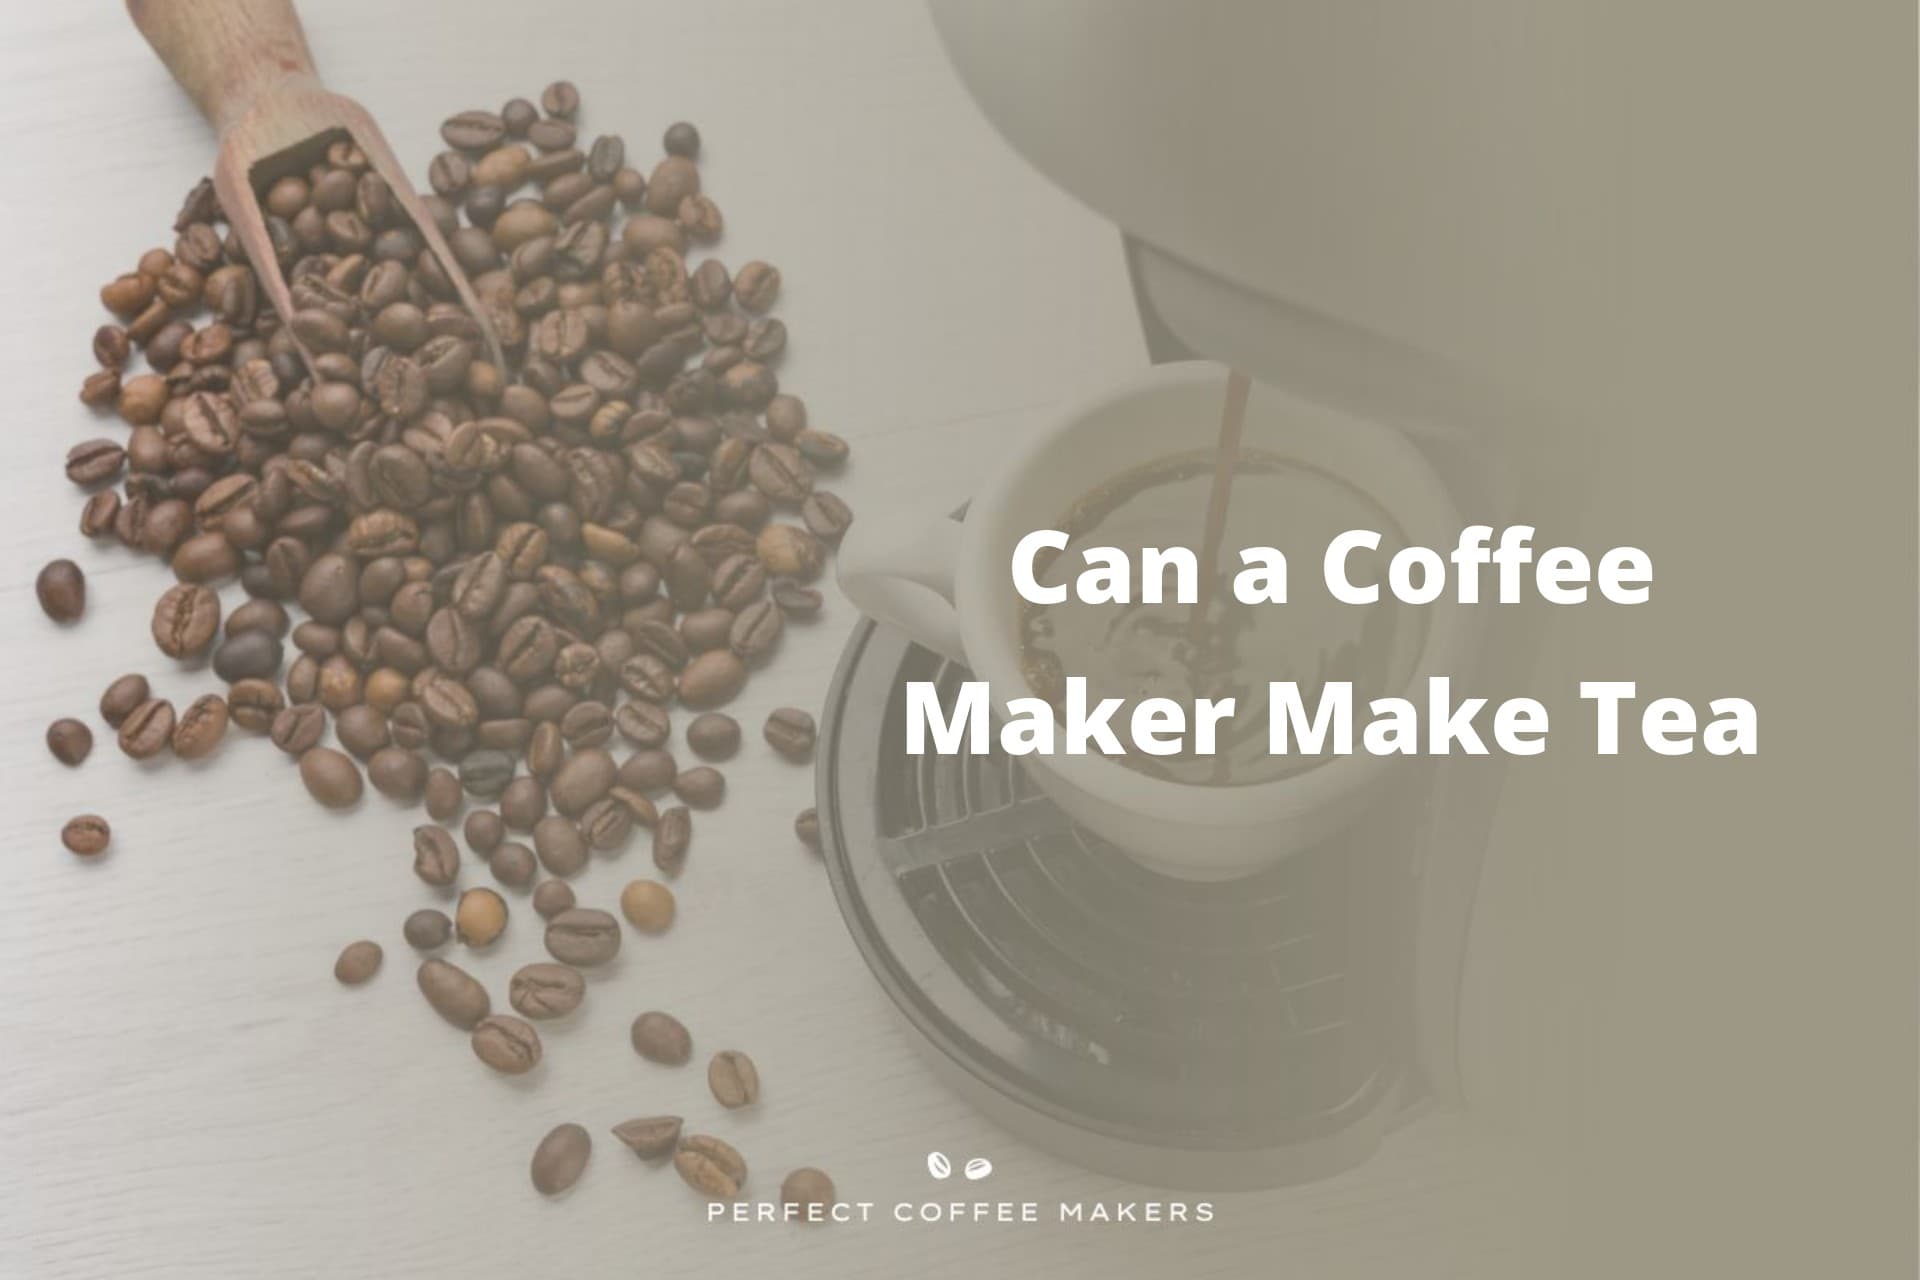 Can a Coffee Maker Make Tea